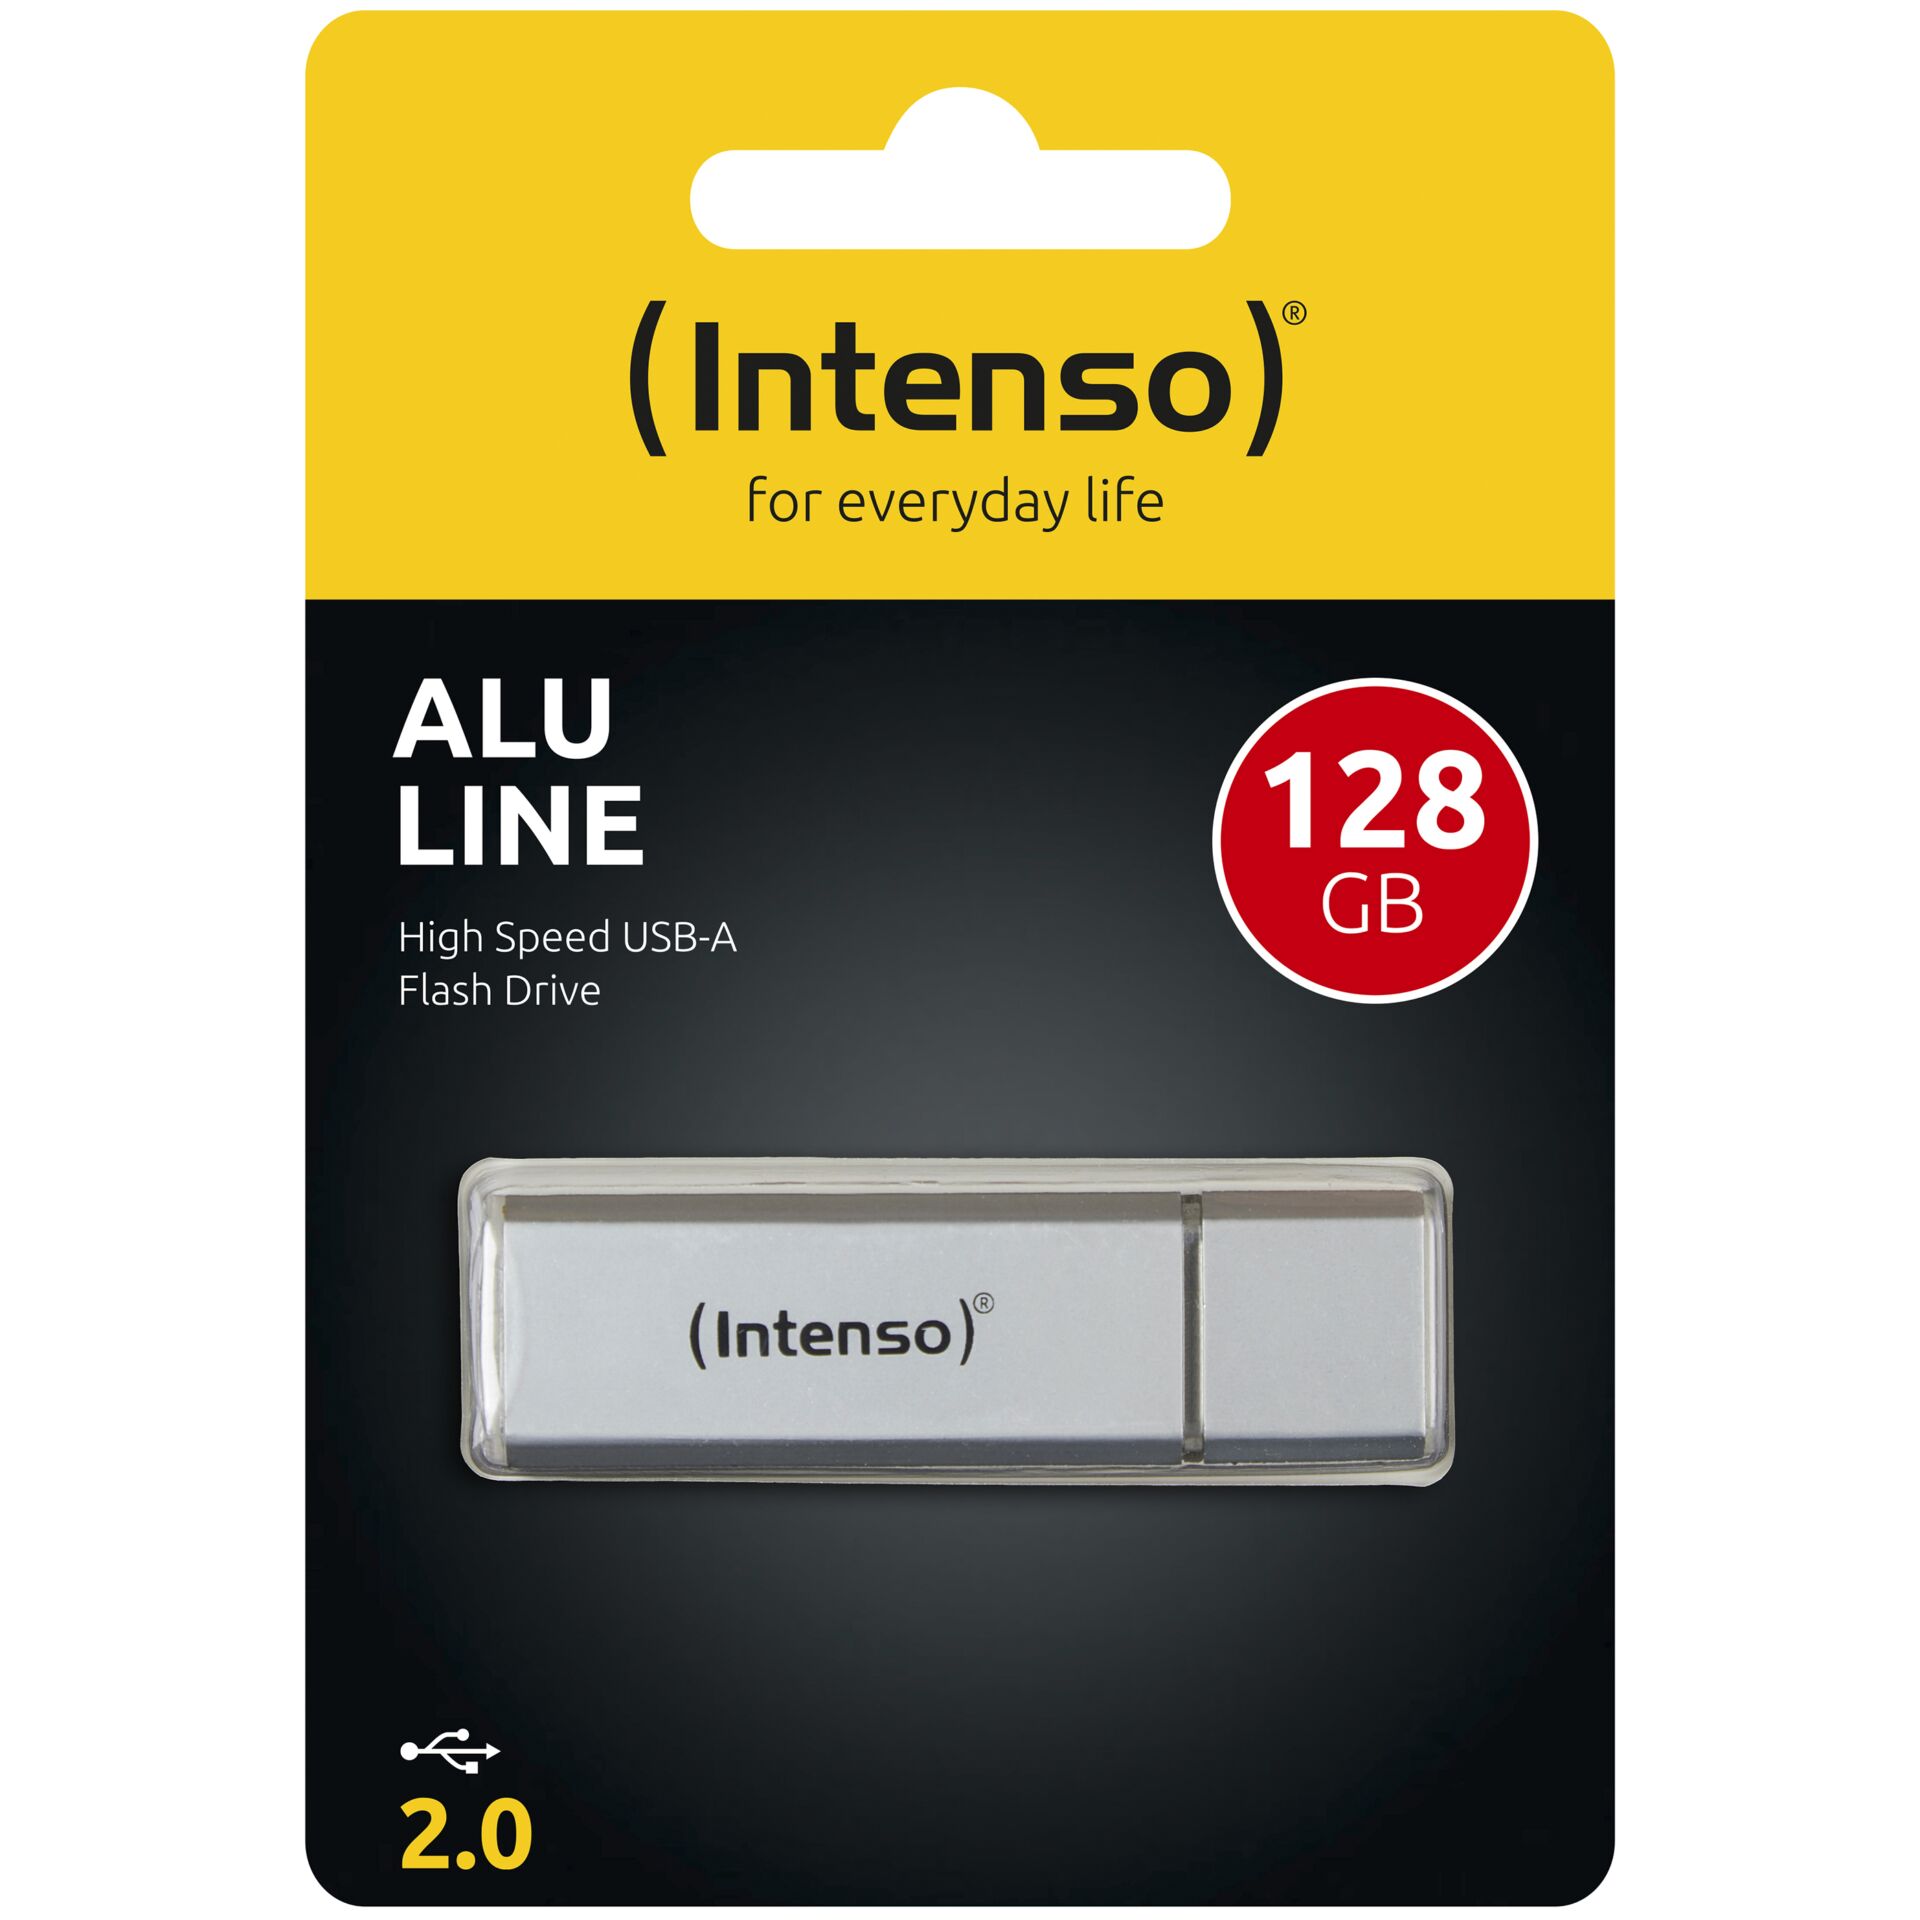 Intenso Alu Line 128GB USB 2.0 Silver